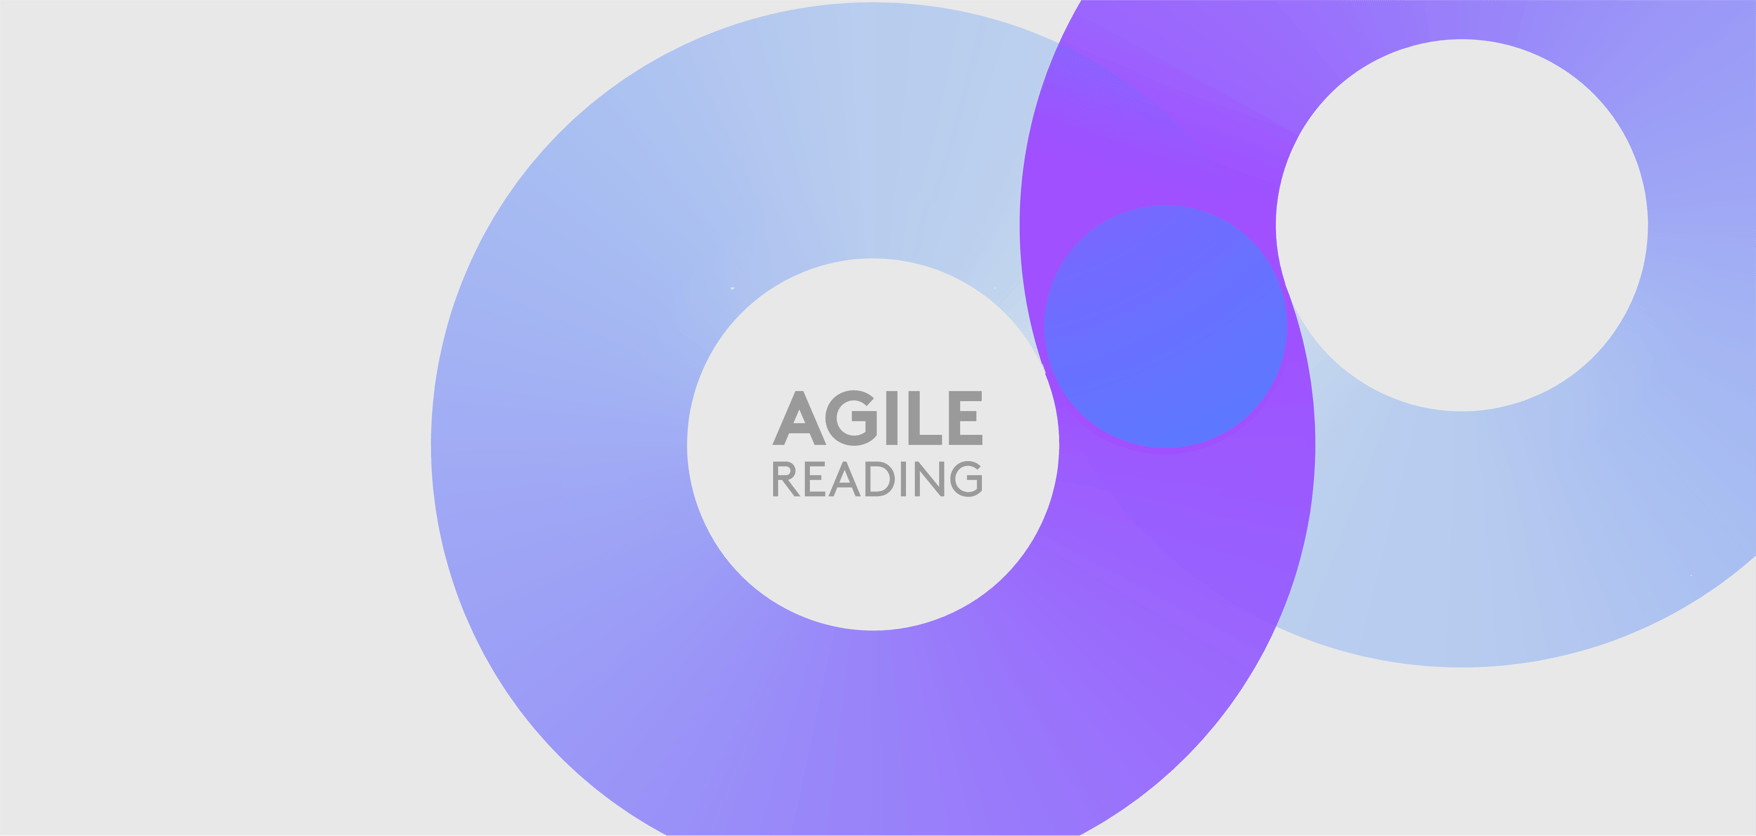 Agile Reading_Desktop resized -43